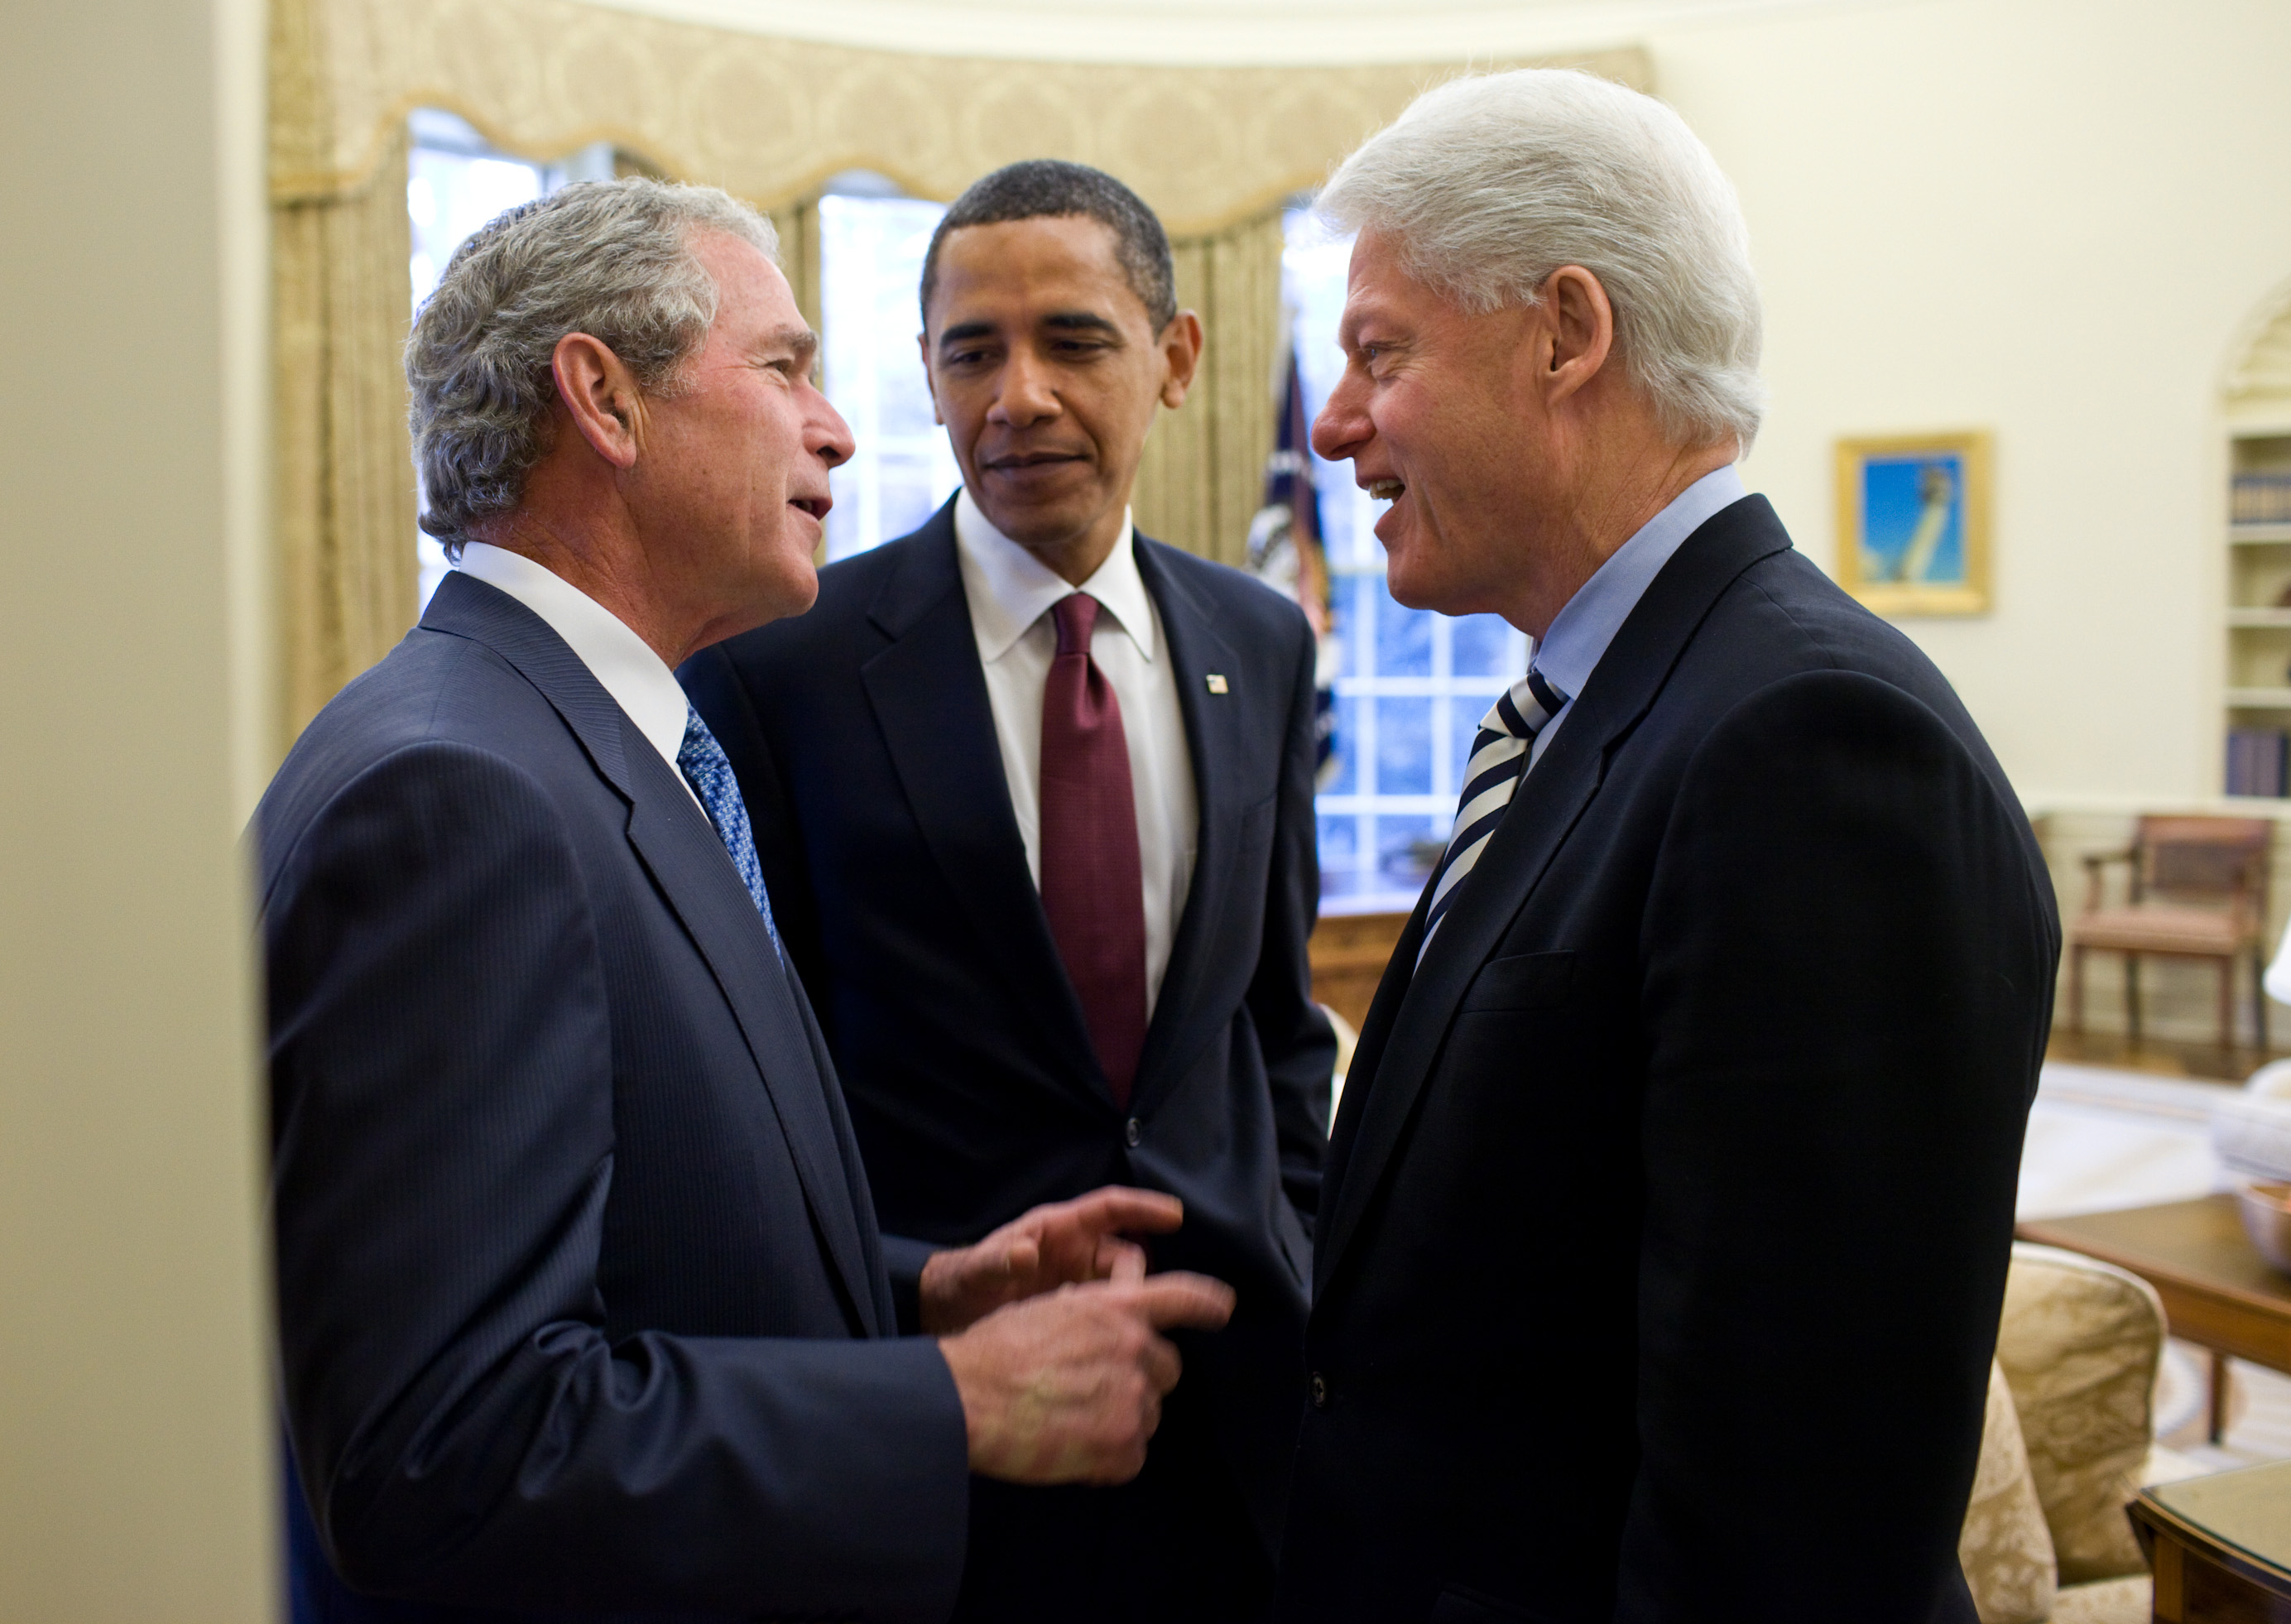 http://endoftheamericandream.com/wp-content/uploads/2011/01/Bush-Obama-Clinton.jpg